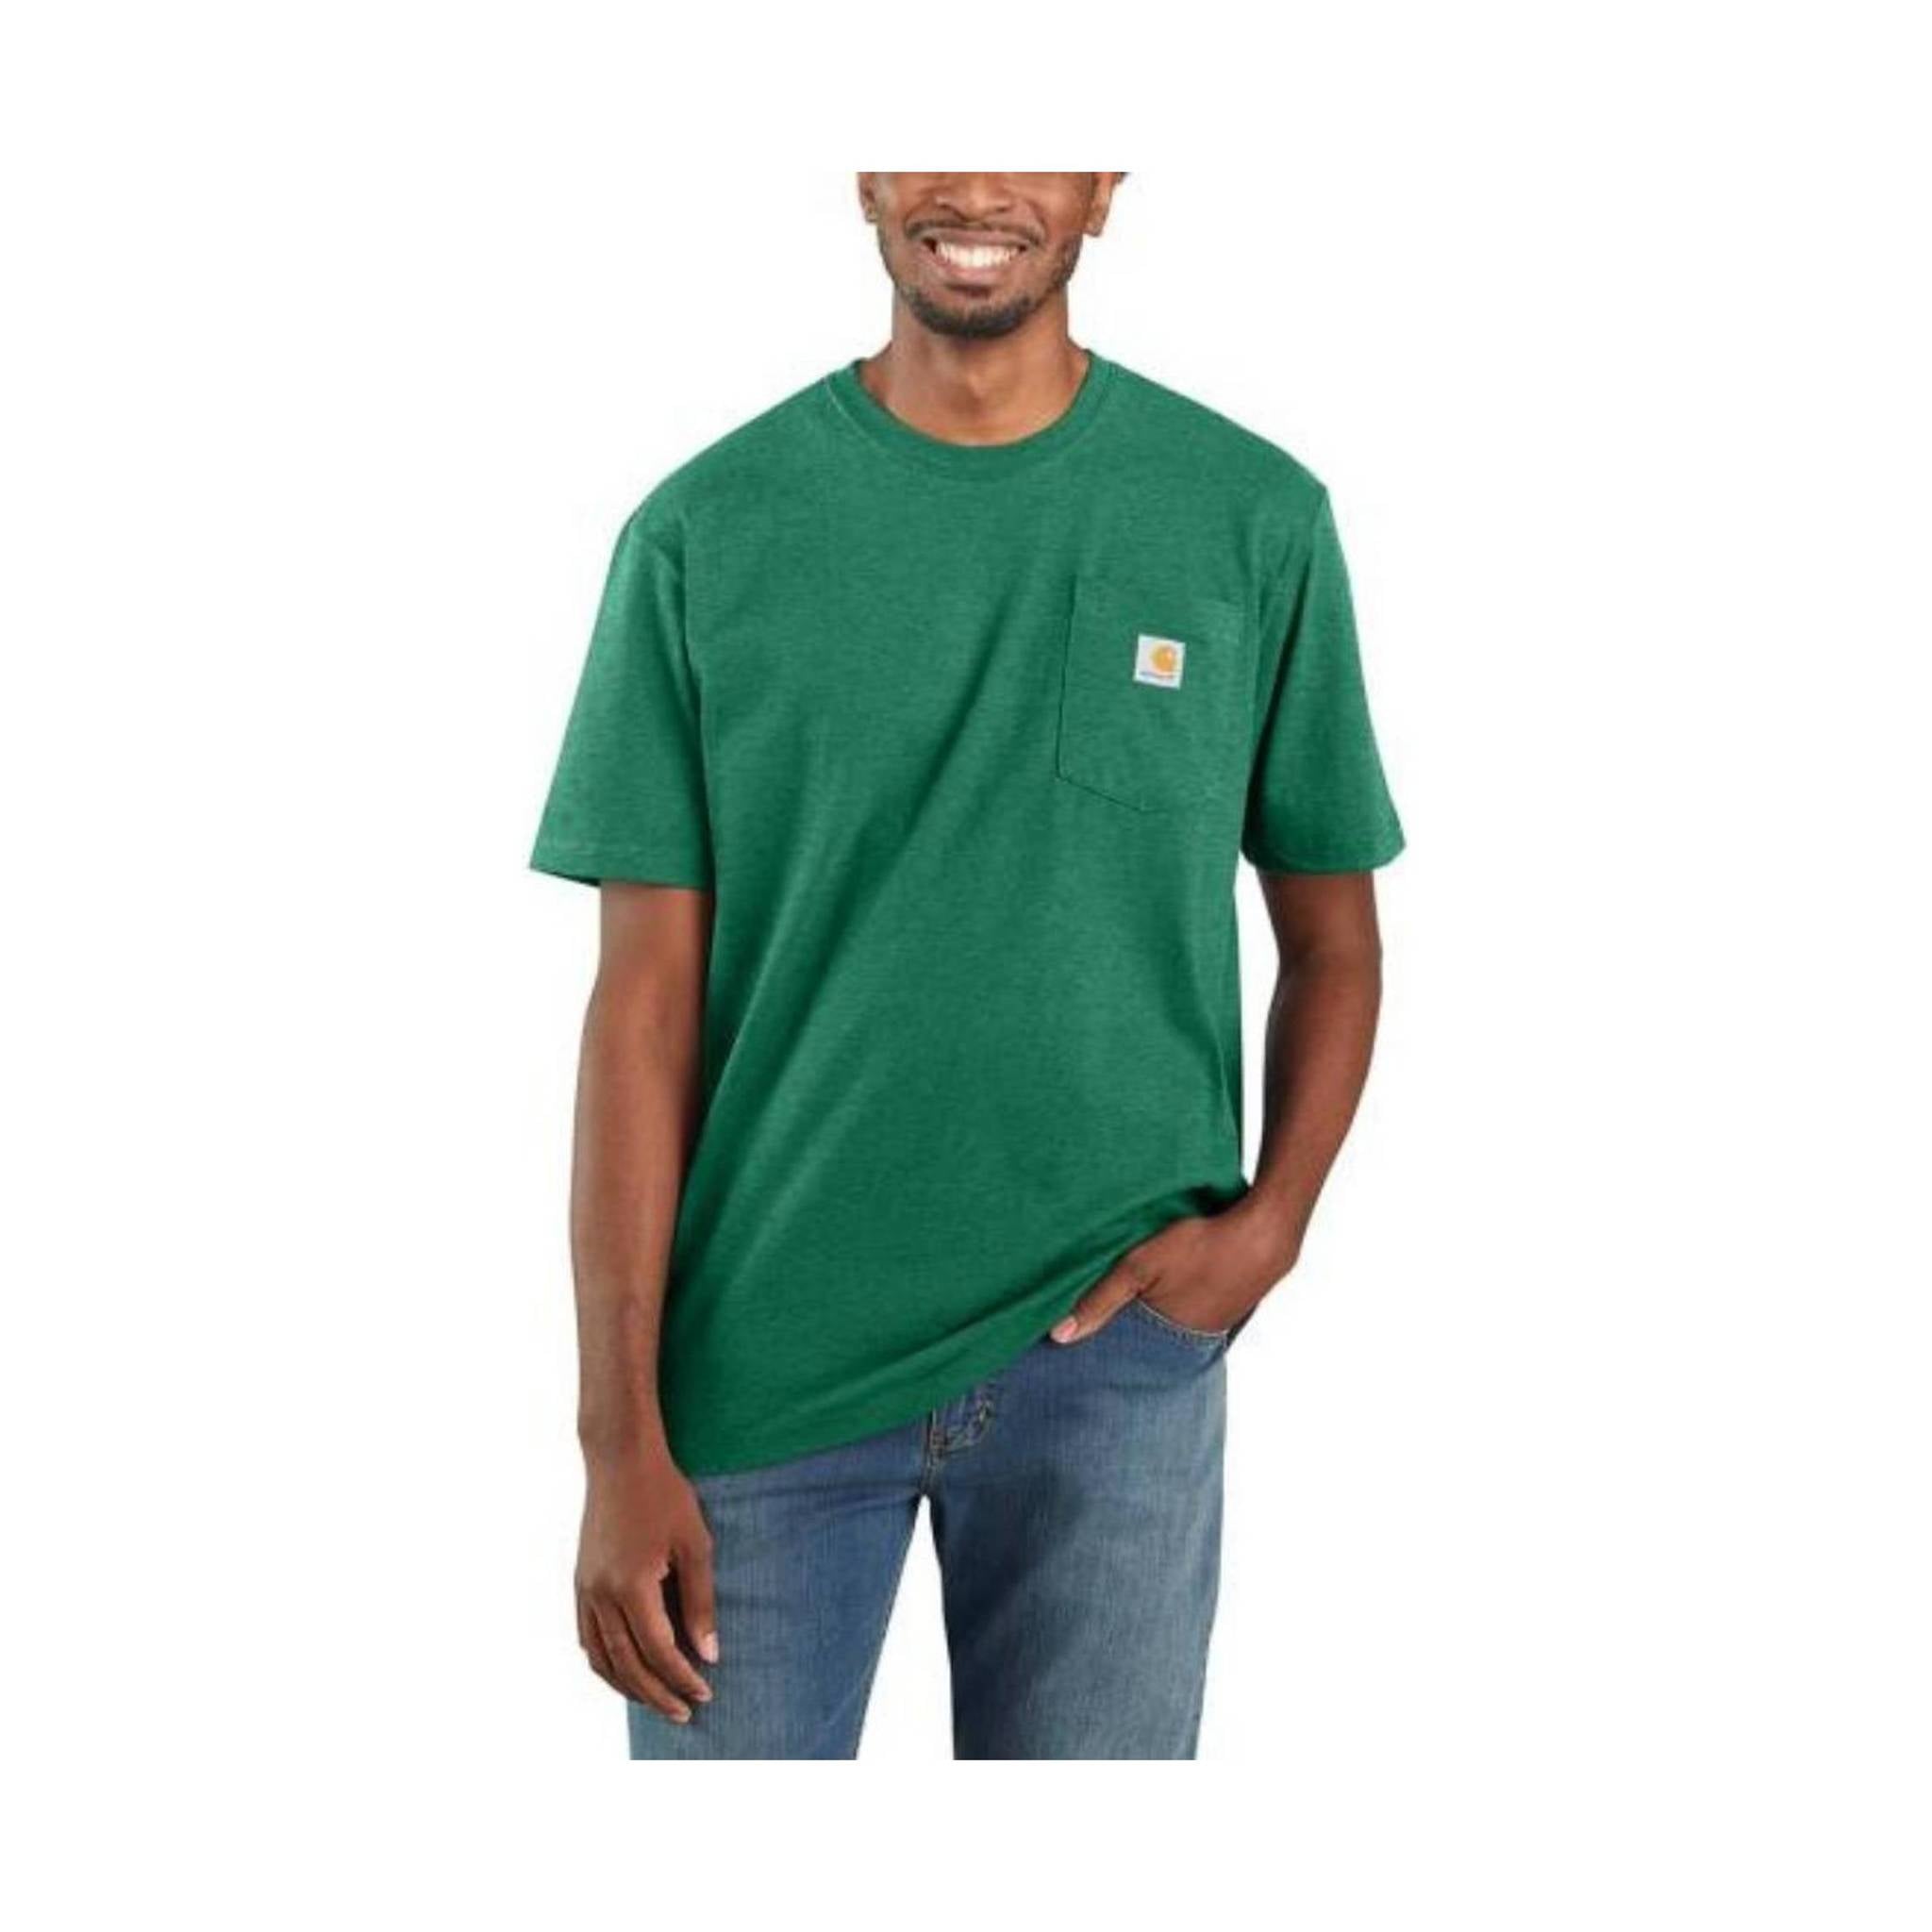 Carhartt Long Sleeve Workwear Pocket T-Shirt Men's Black